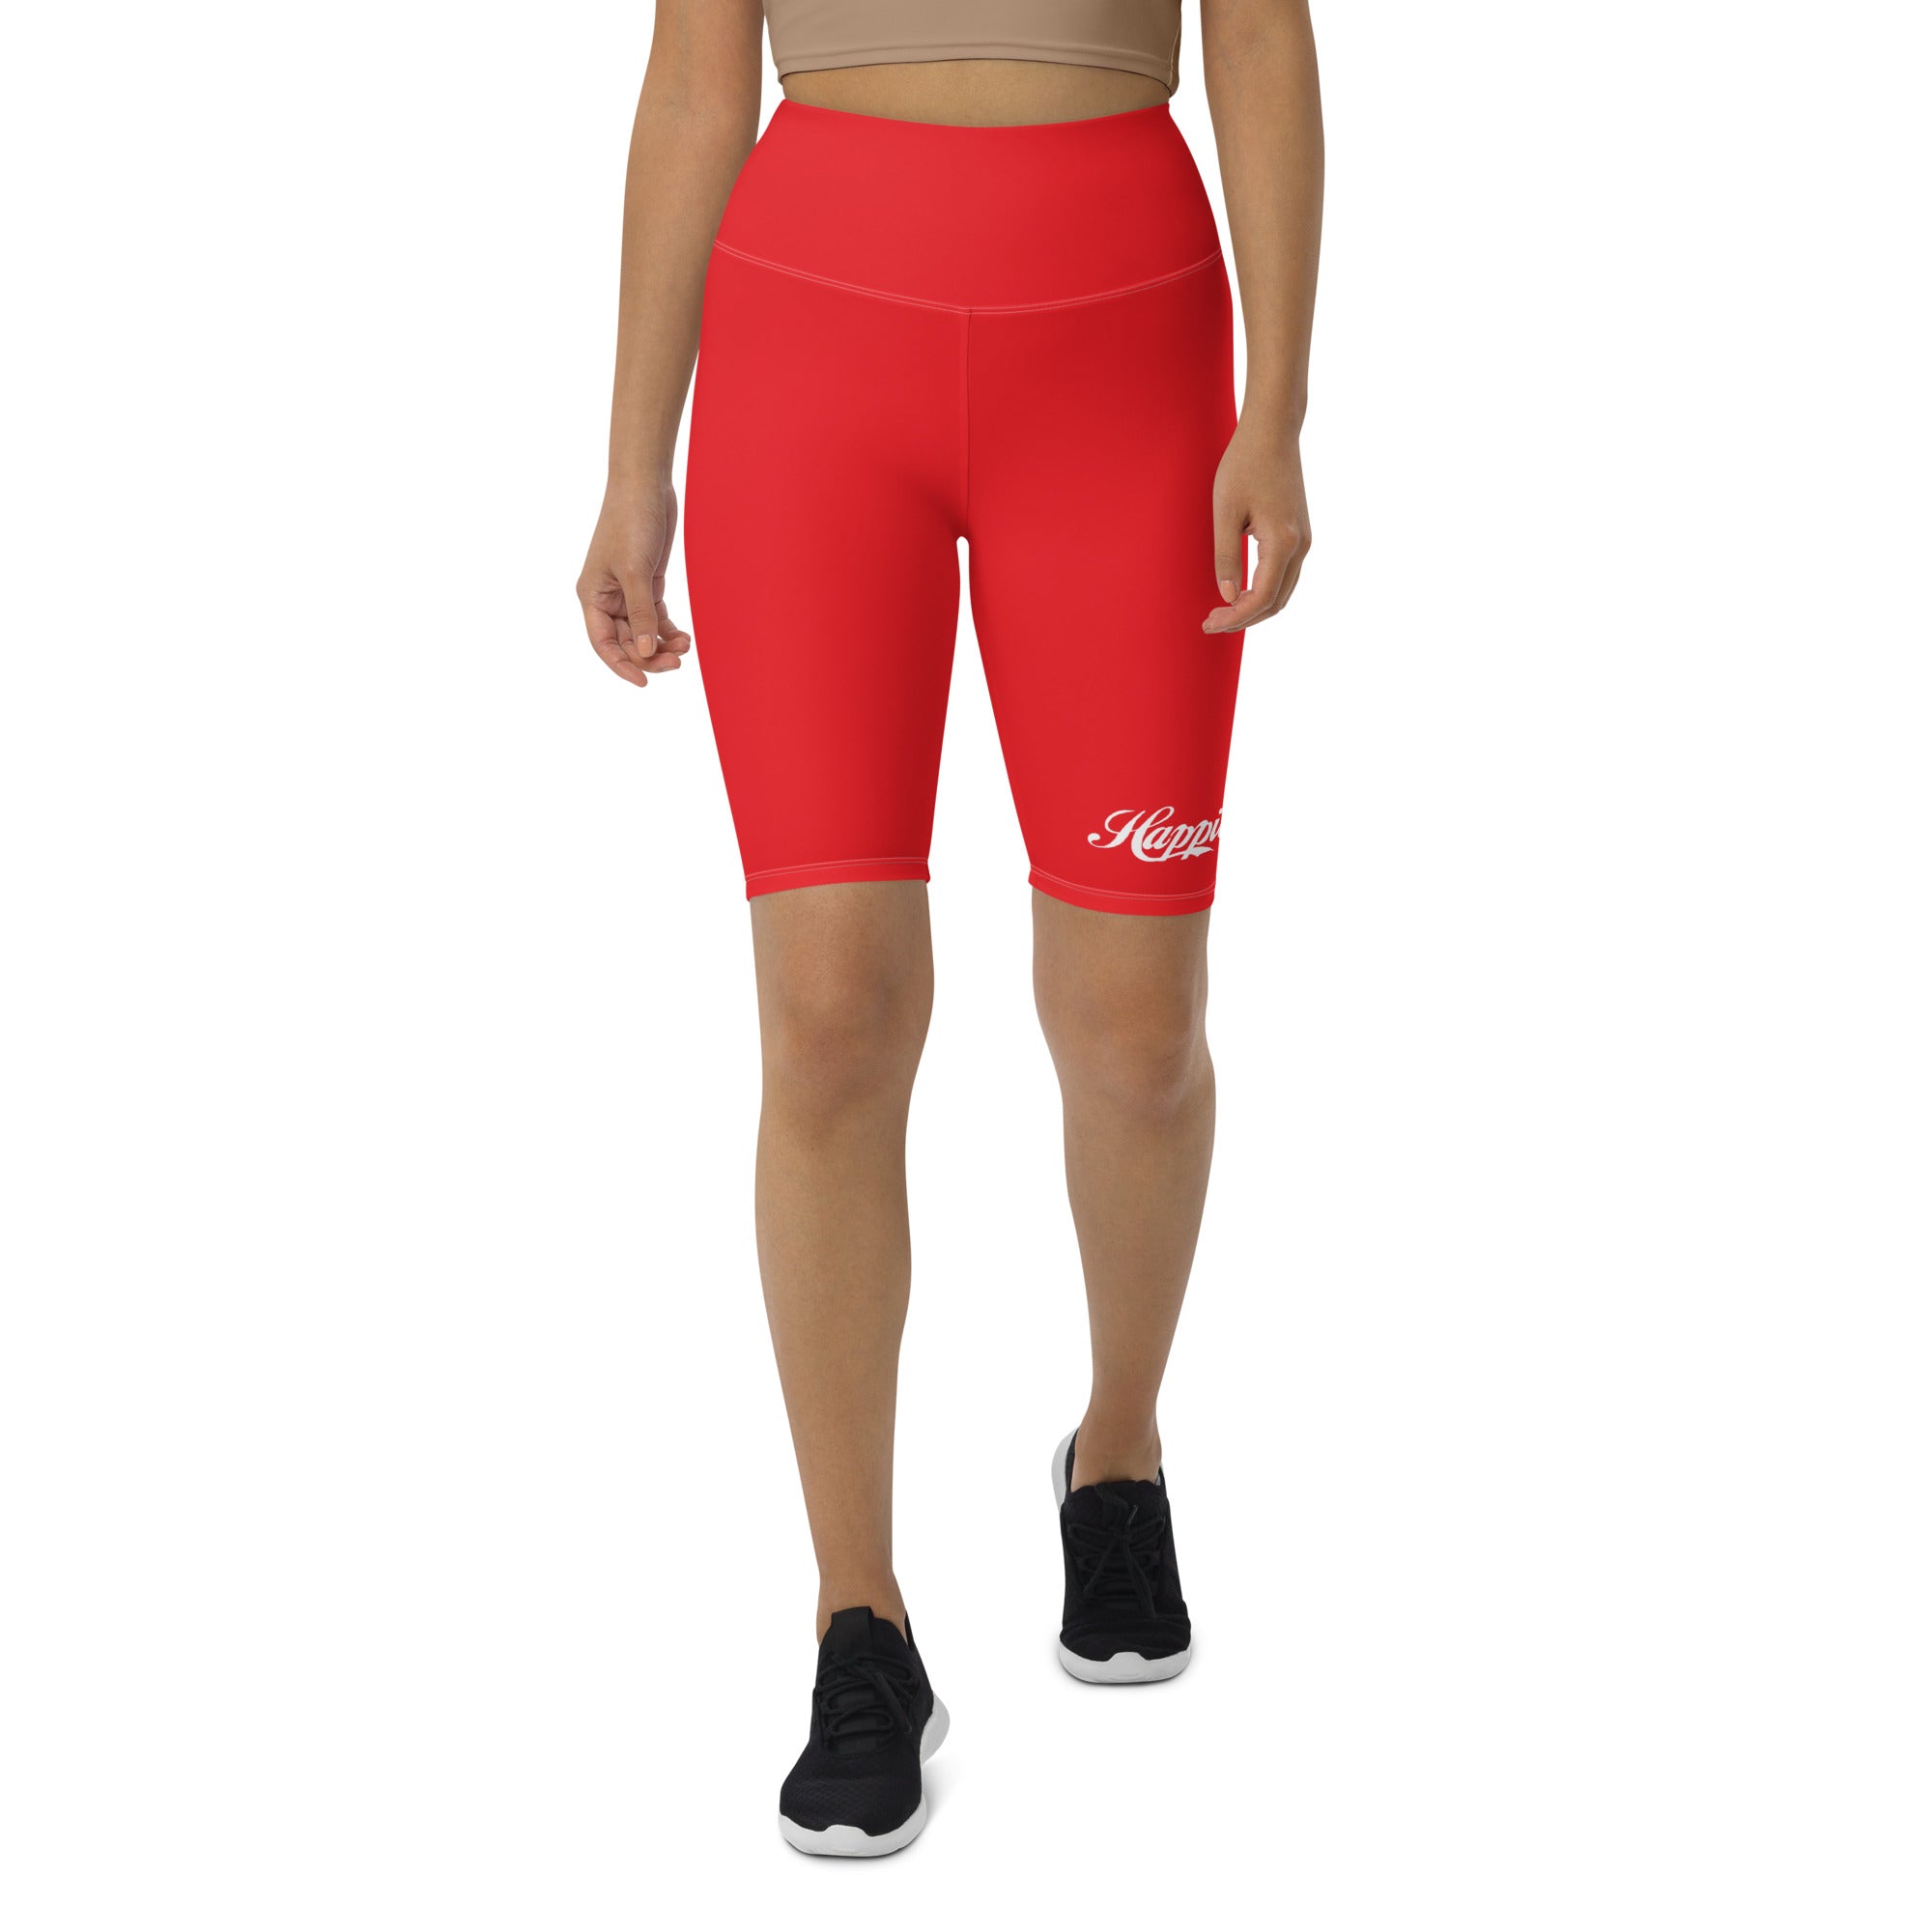 Red Soda Biker Shorts